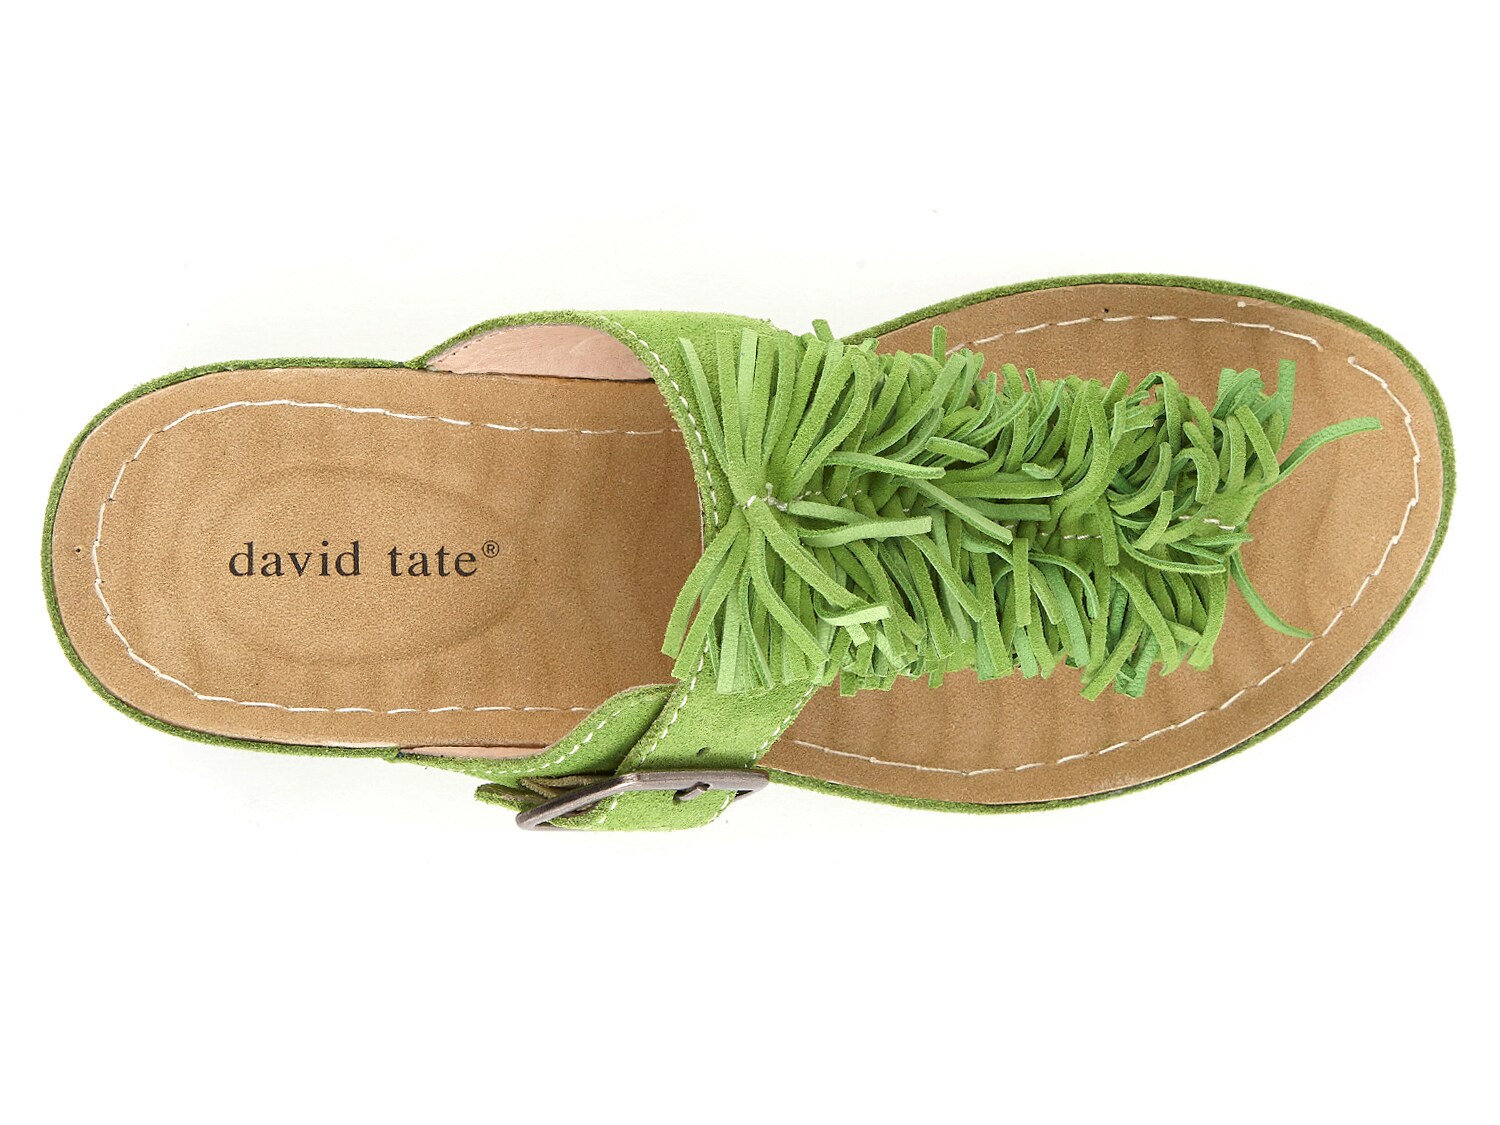 david tate fiesta wedge sandal